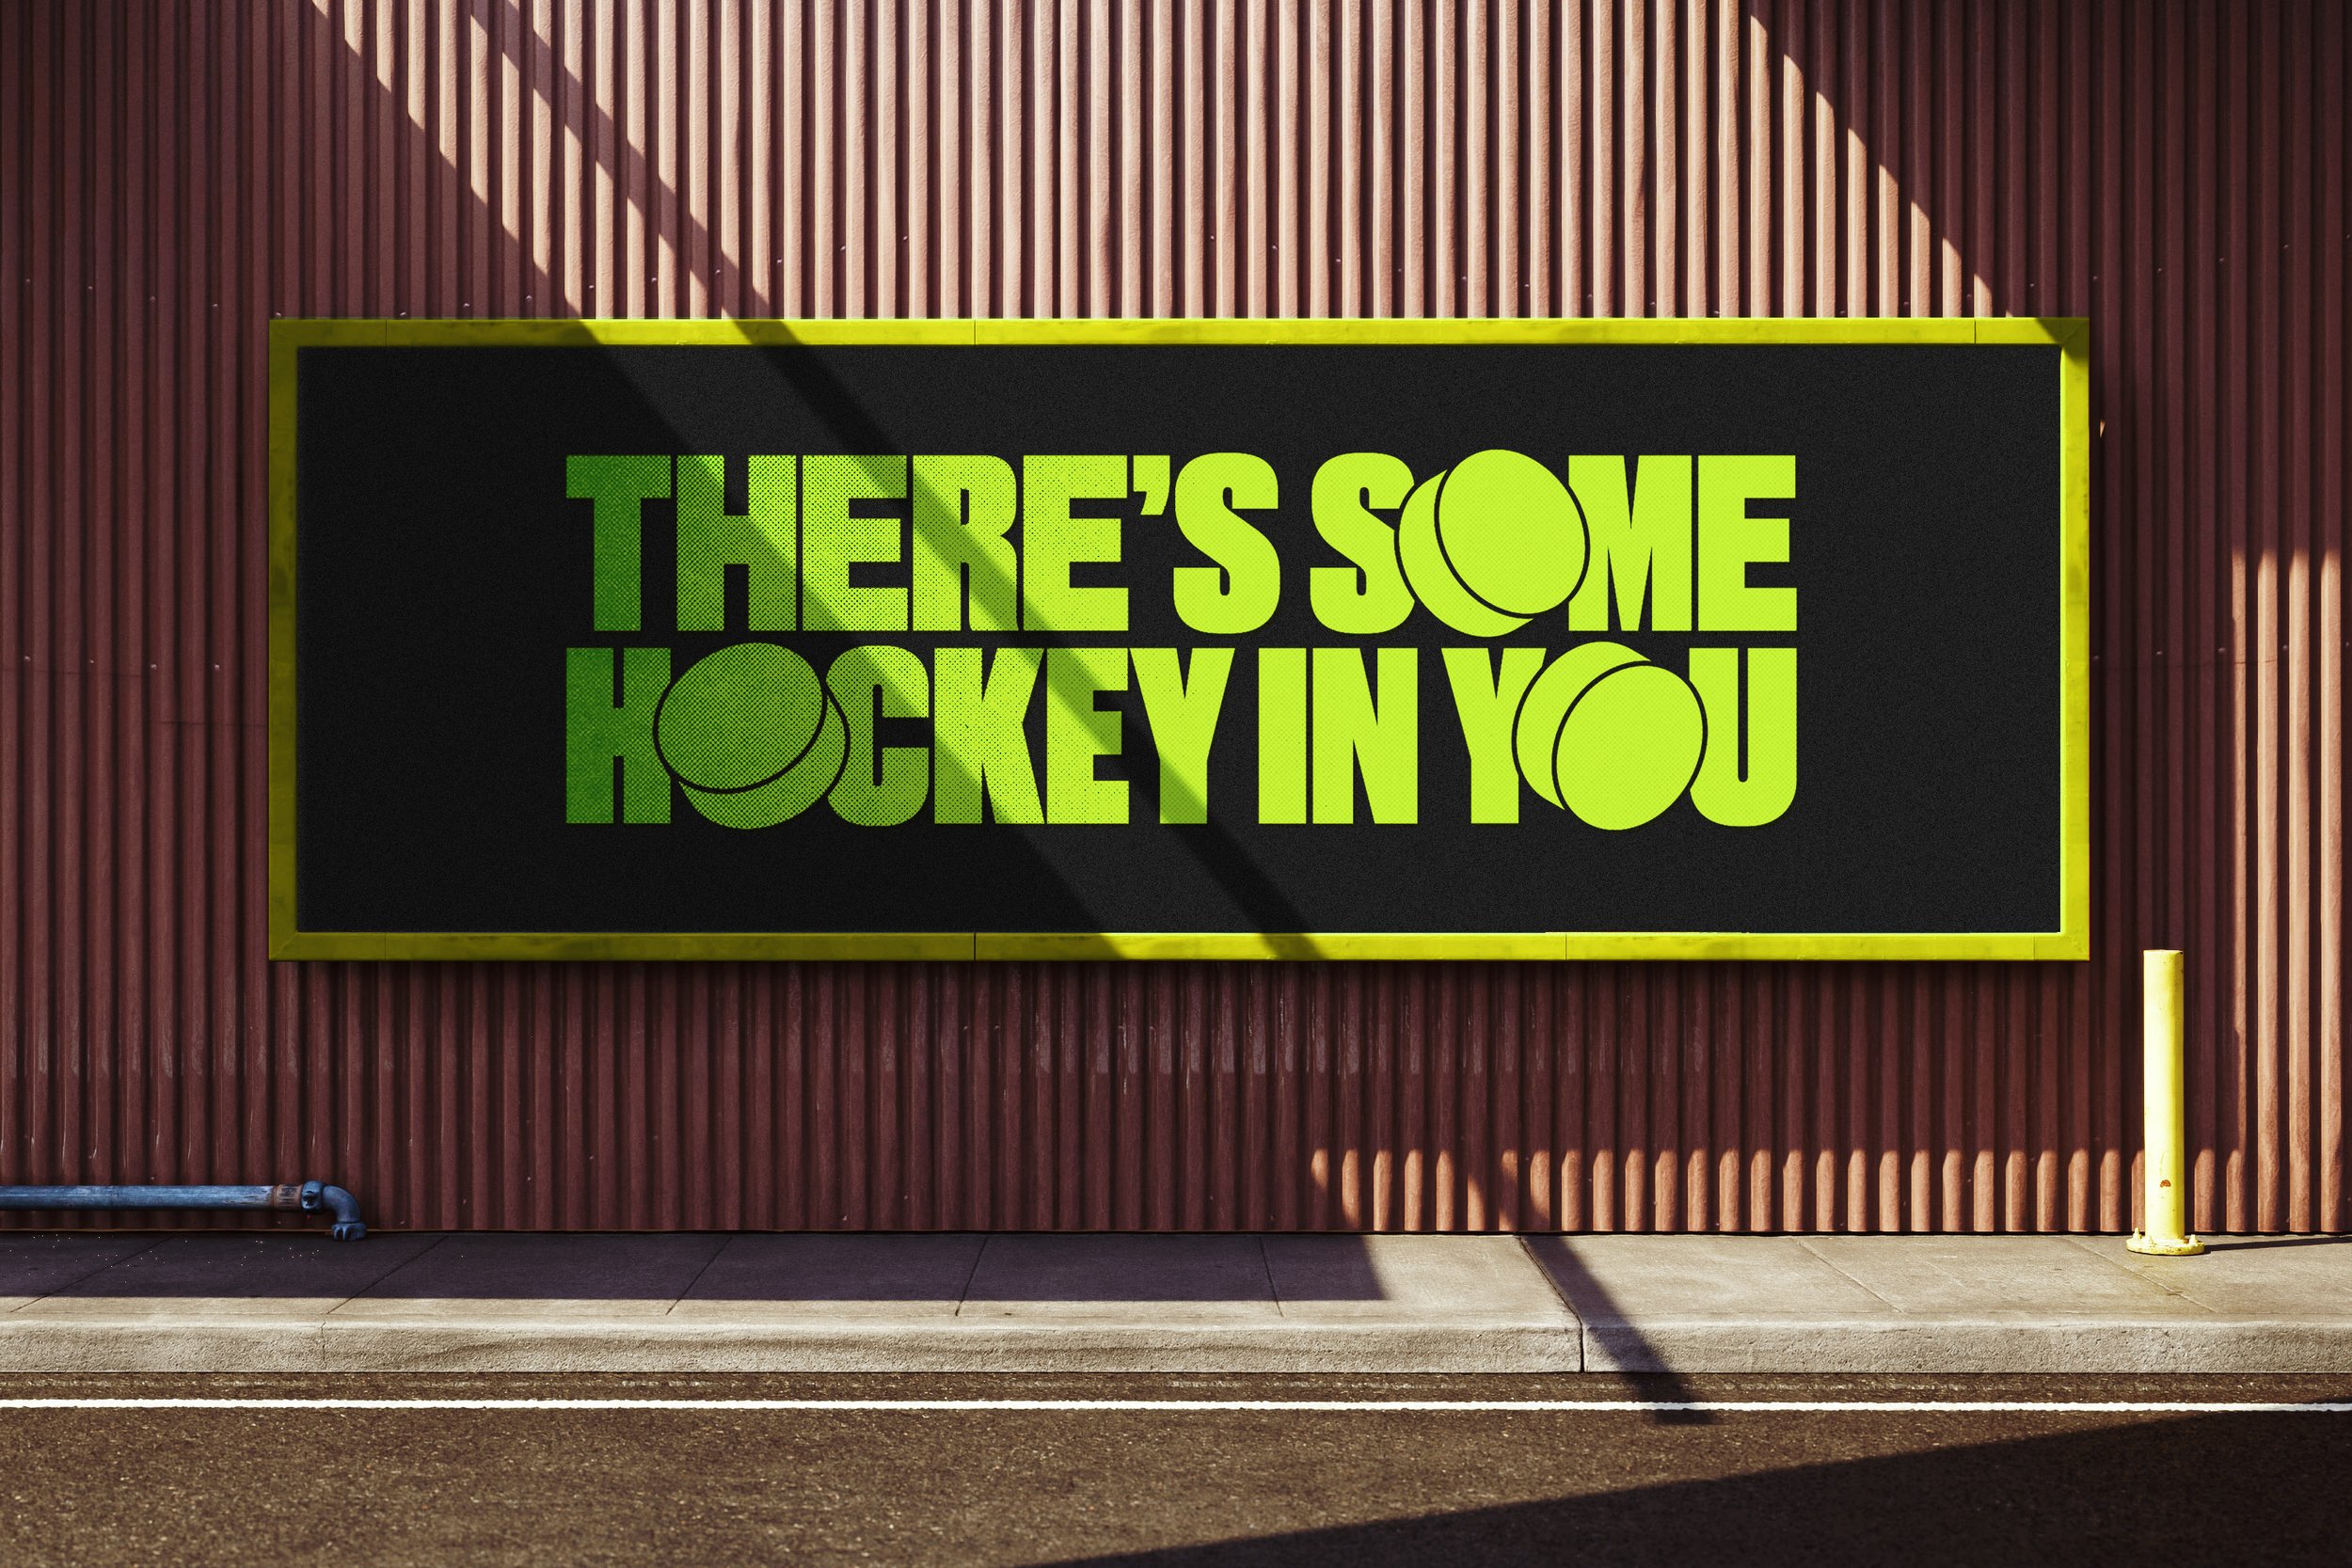 Hockey-OOH.jpg